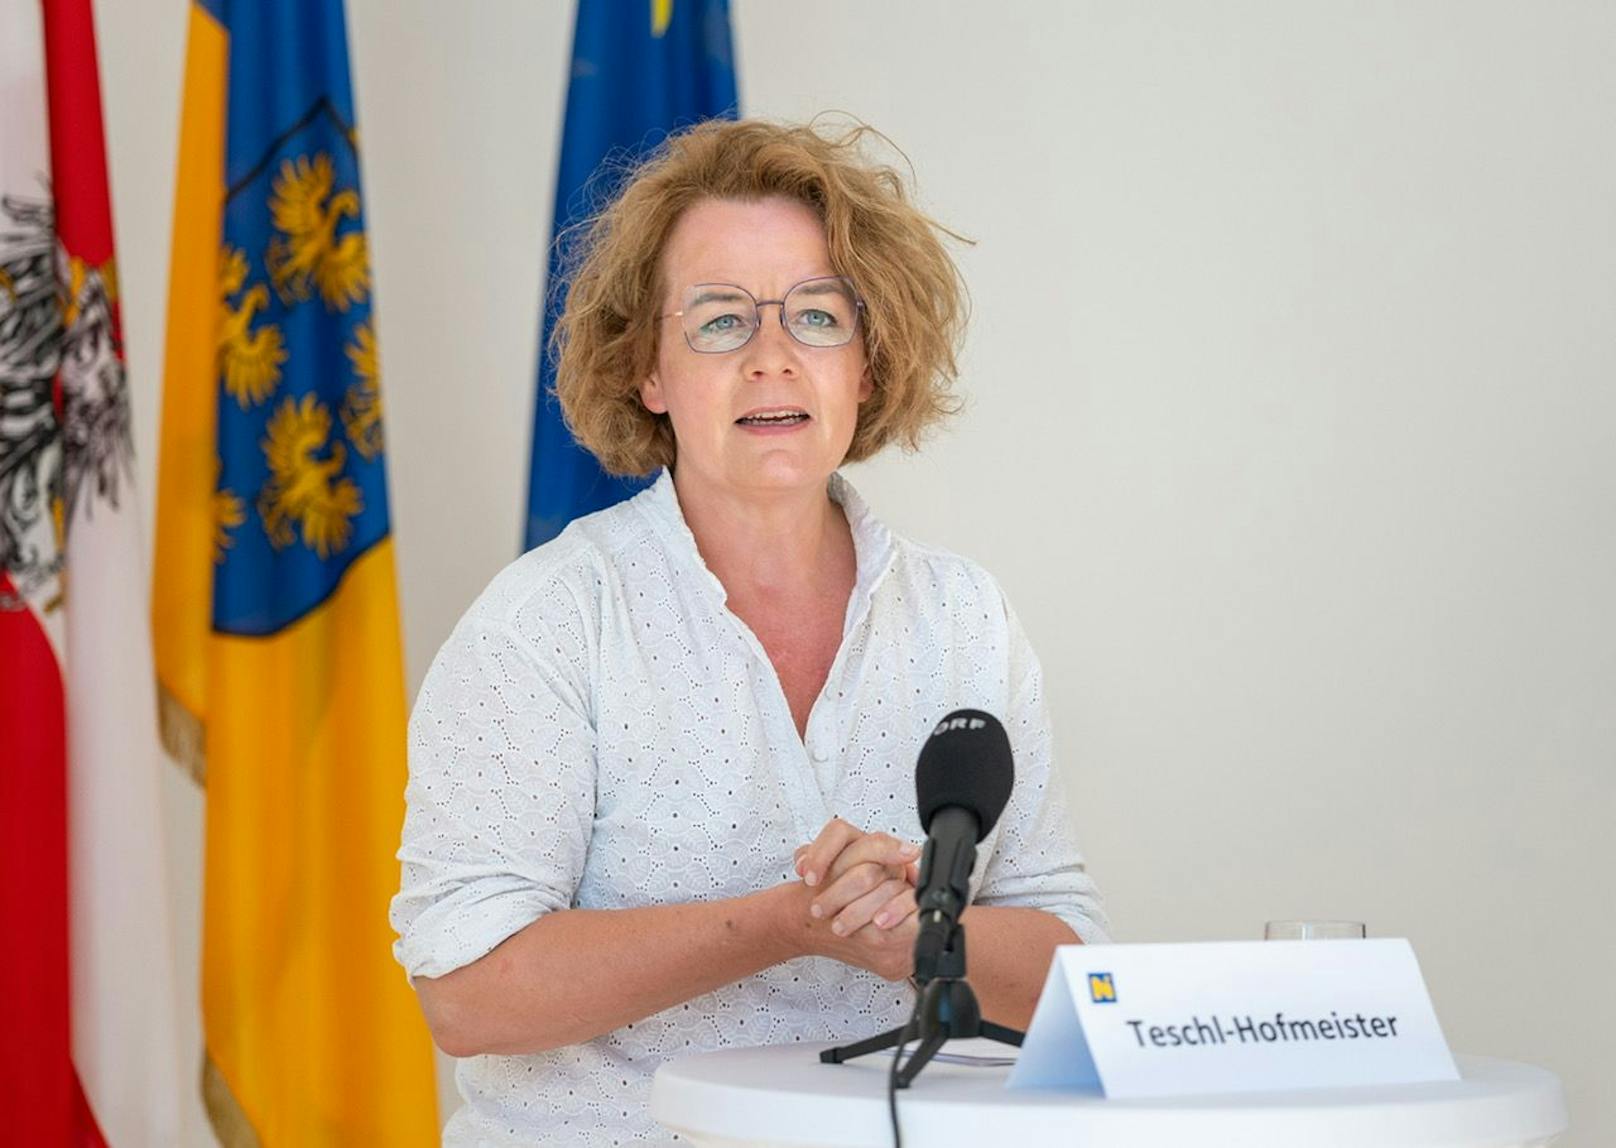 Wohnbau-Landesrätin Christiane Teschl-Hofmeister